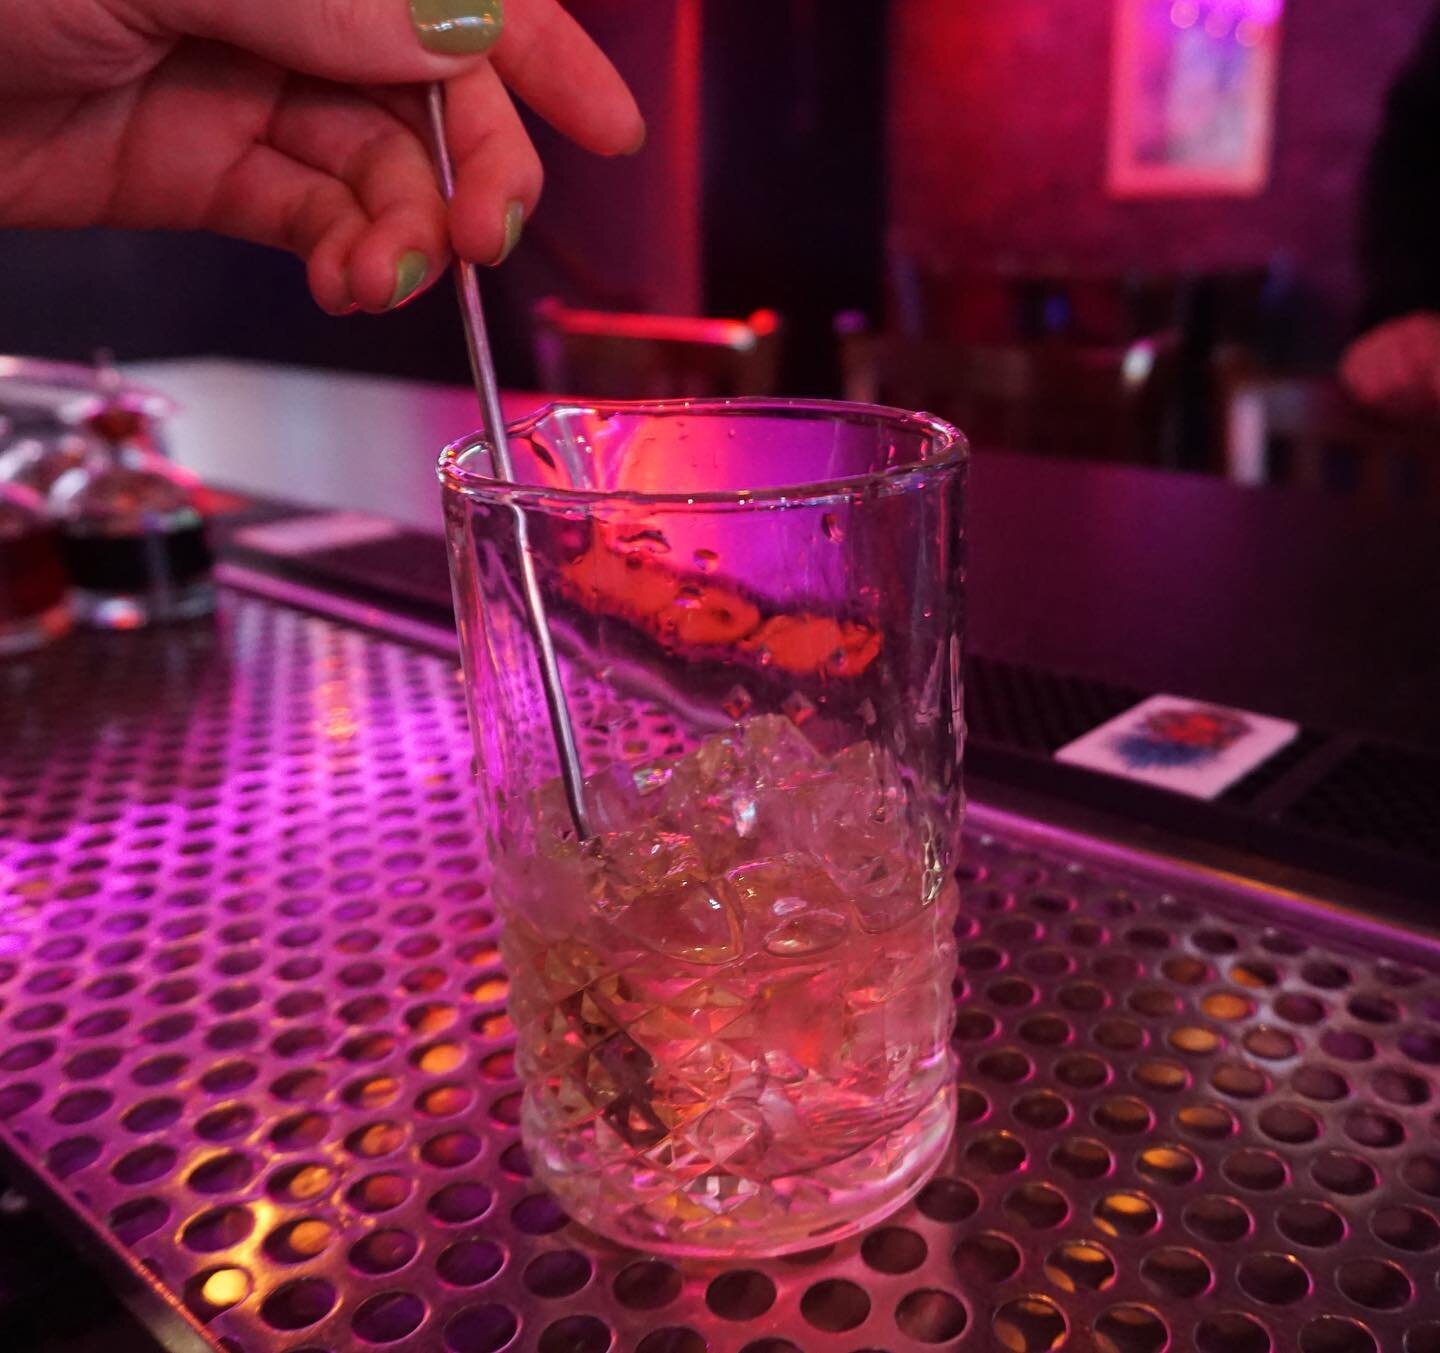 Escape the heat with an ice cold martini. Always stirred never shaken. 😜

#bartender #losangeles #nightlife #martini #cocktails #vibe #stirrednotshaken #dtla